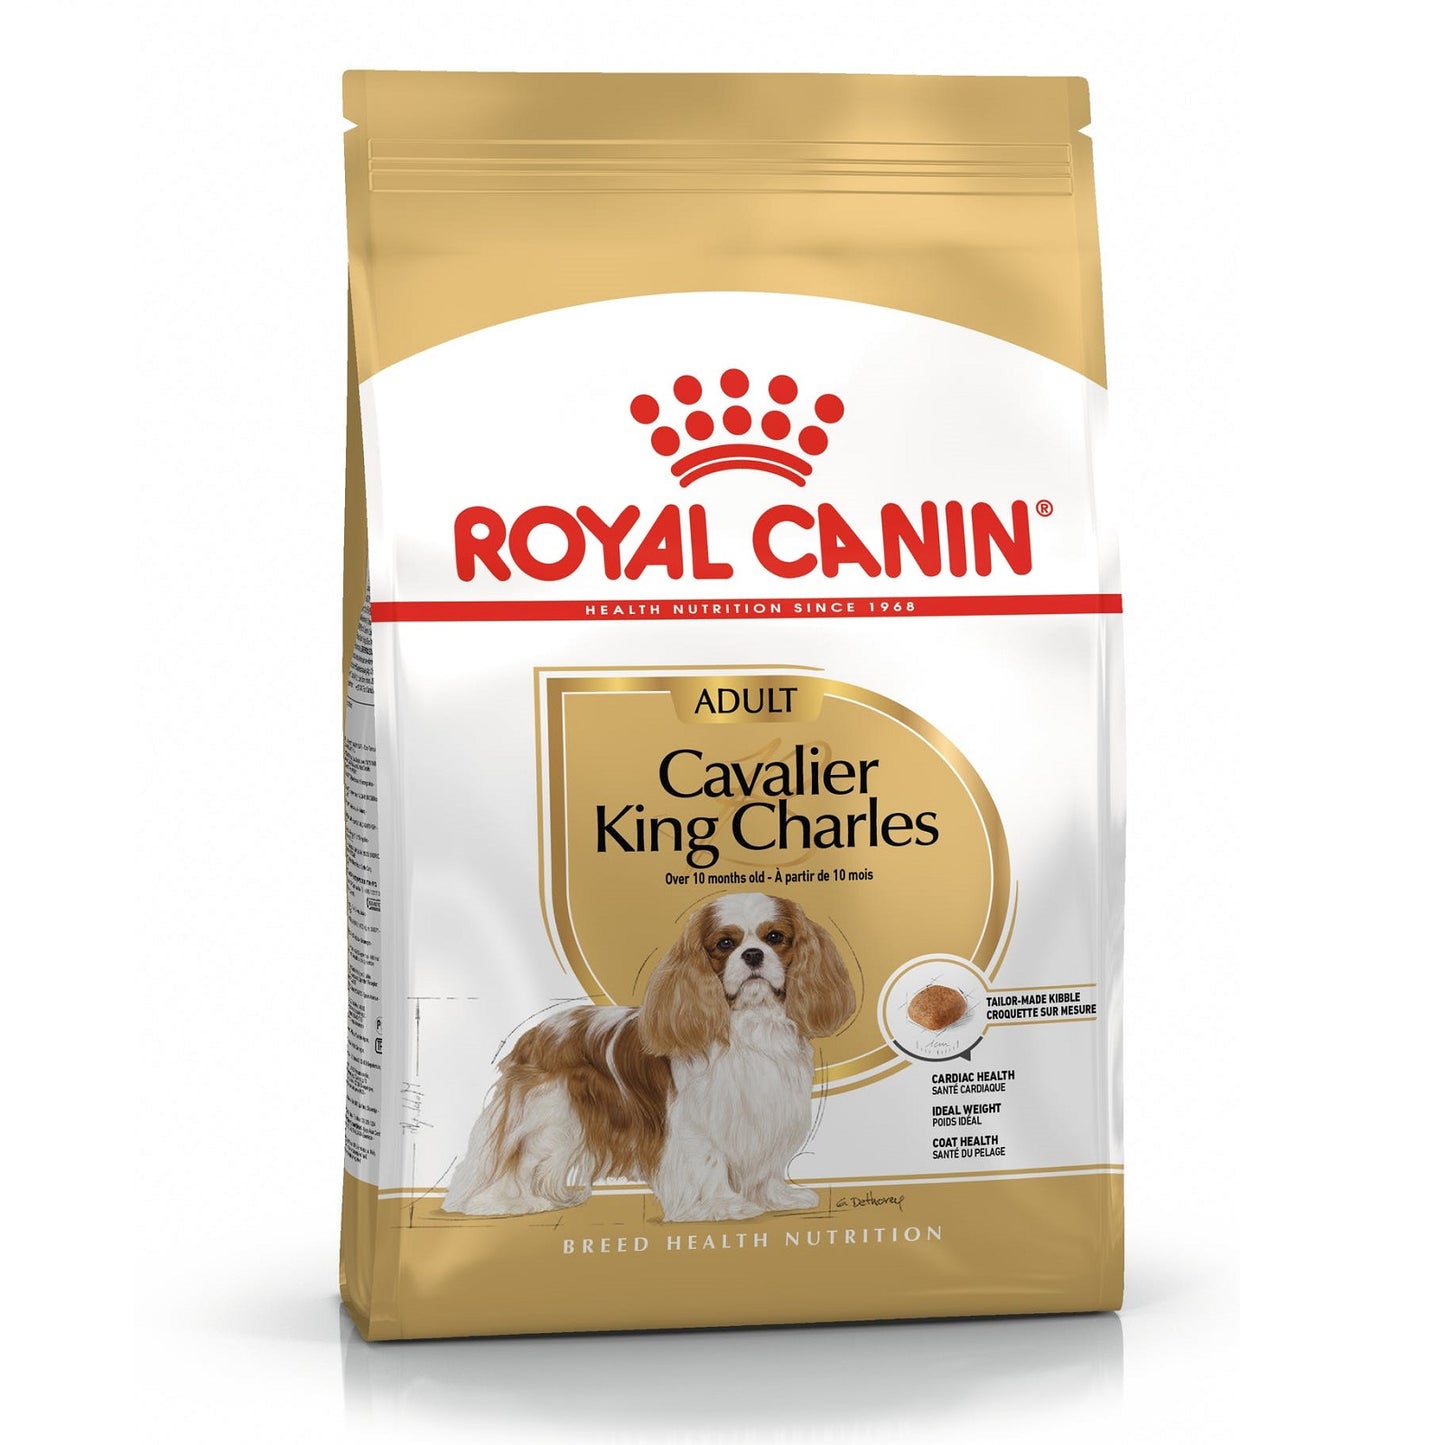 ROYAL CANIN - Cavalier King Charles Adult